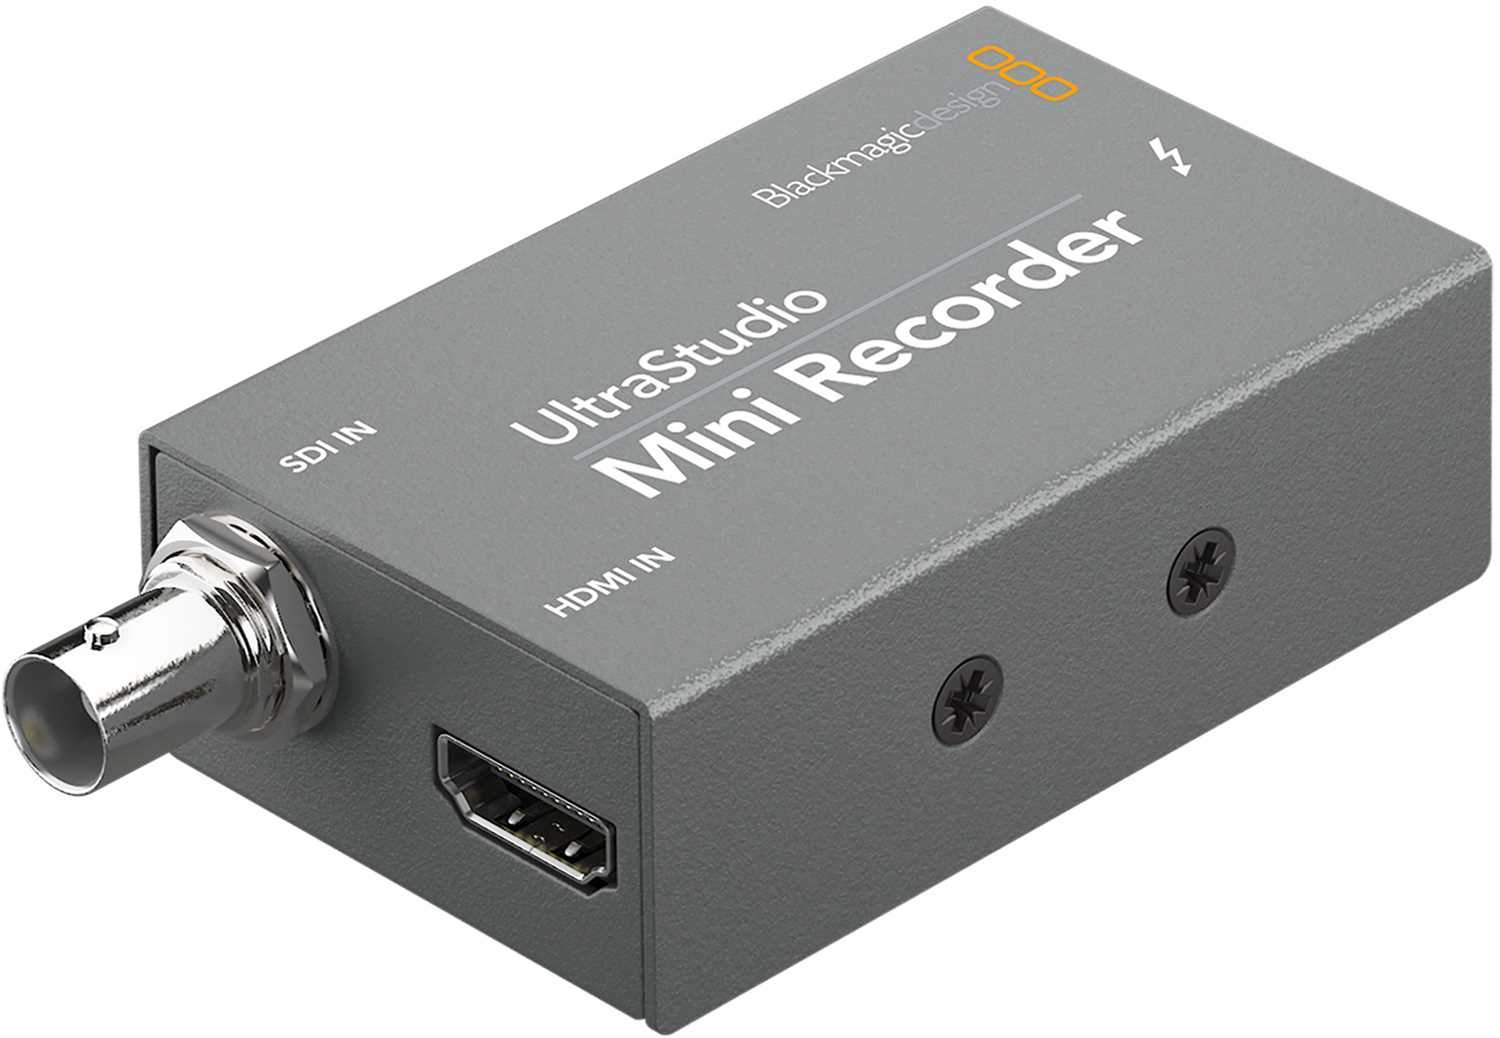 Blackmagic Design UltraStudio Mini Recorder - ProSound and Stage Lighting